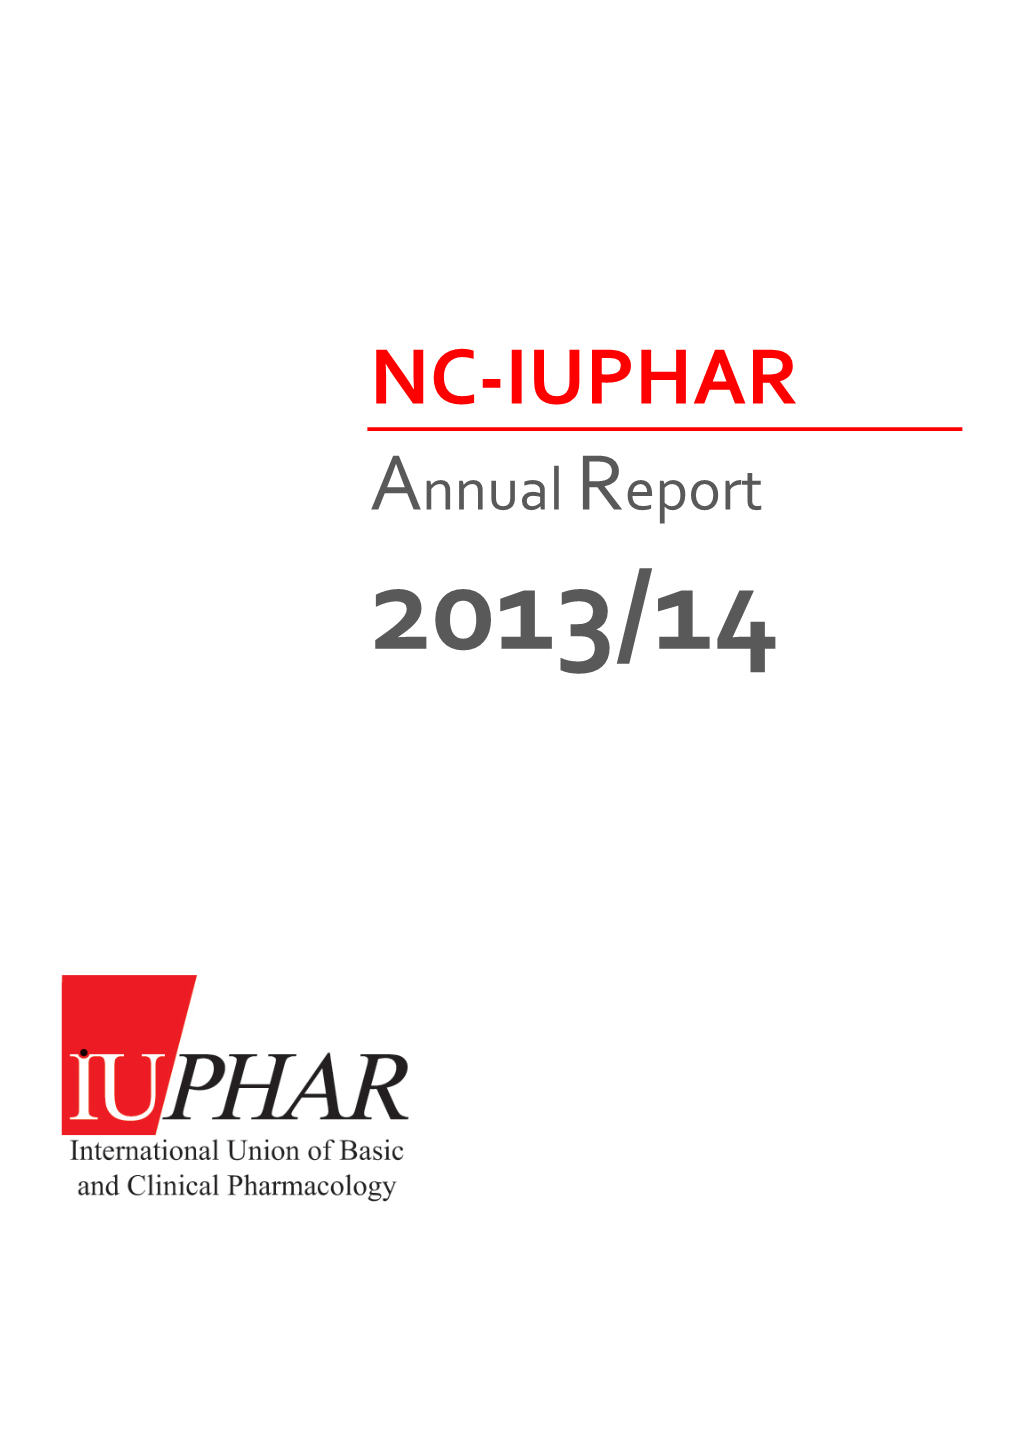 NC-IUPHAR Annual Report 2013/14